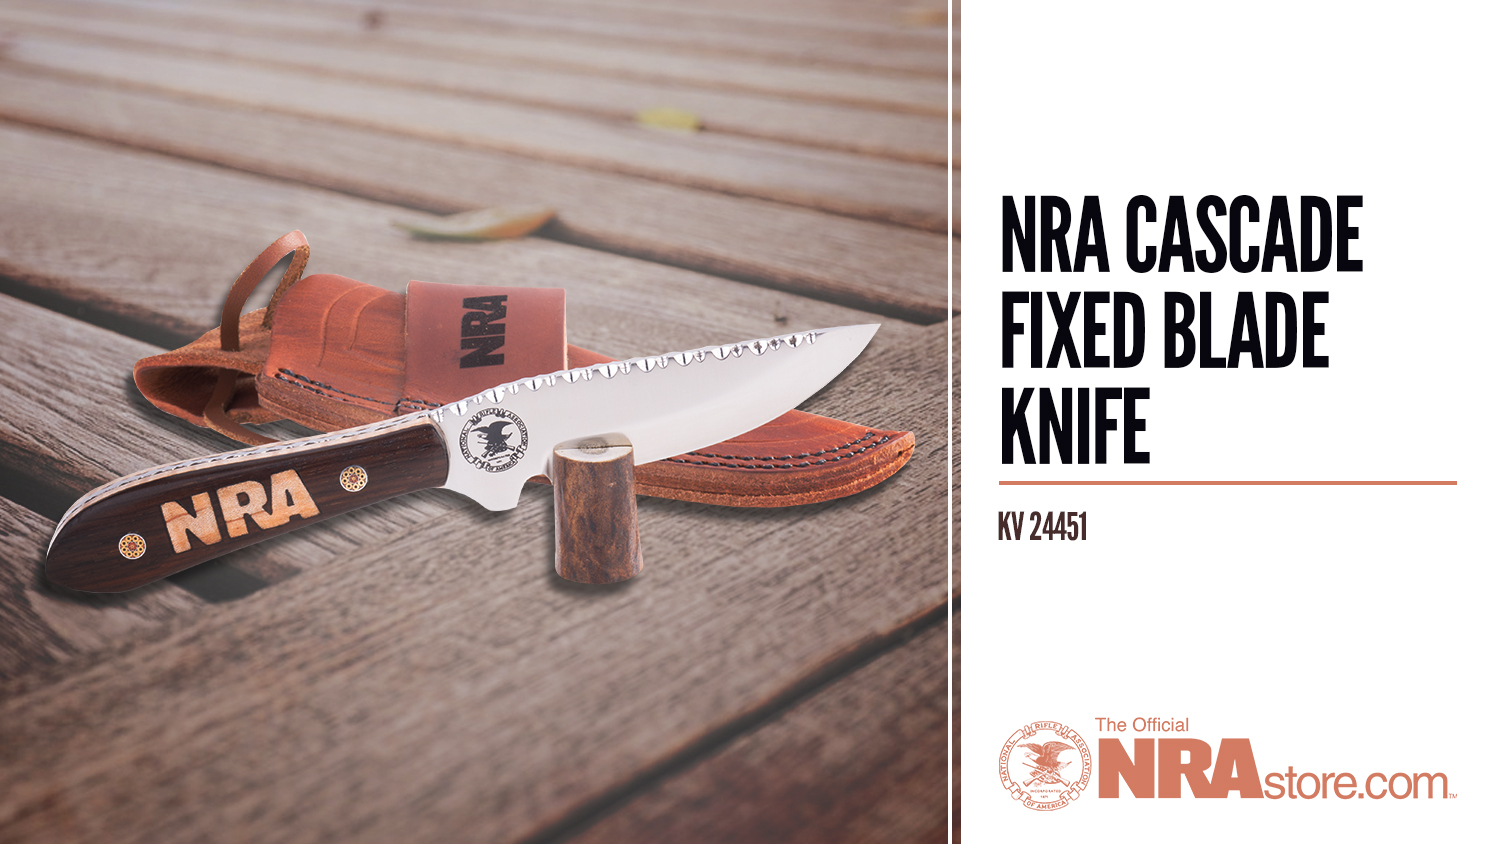 NRAstore Product Highlight: Cascade Fixed Blade Knife